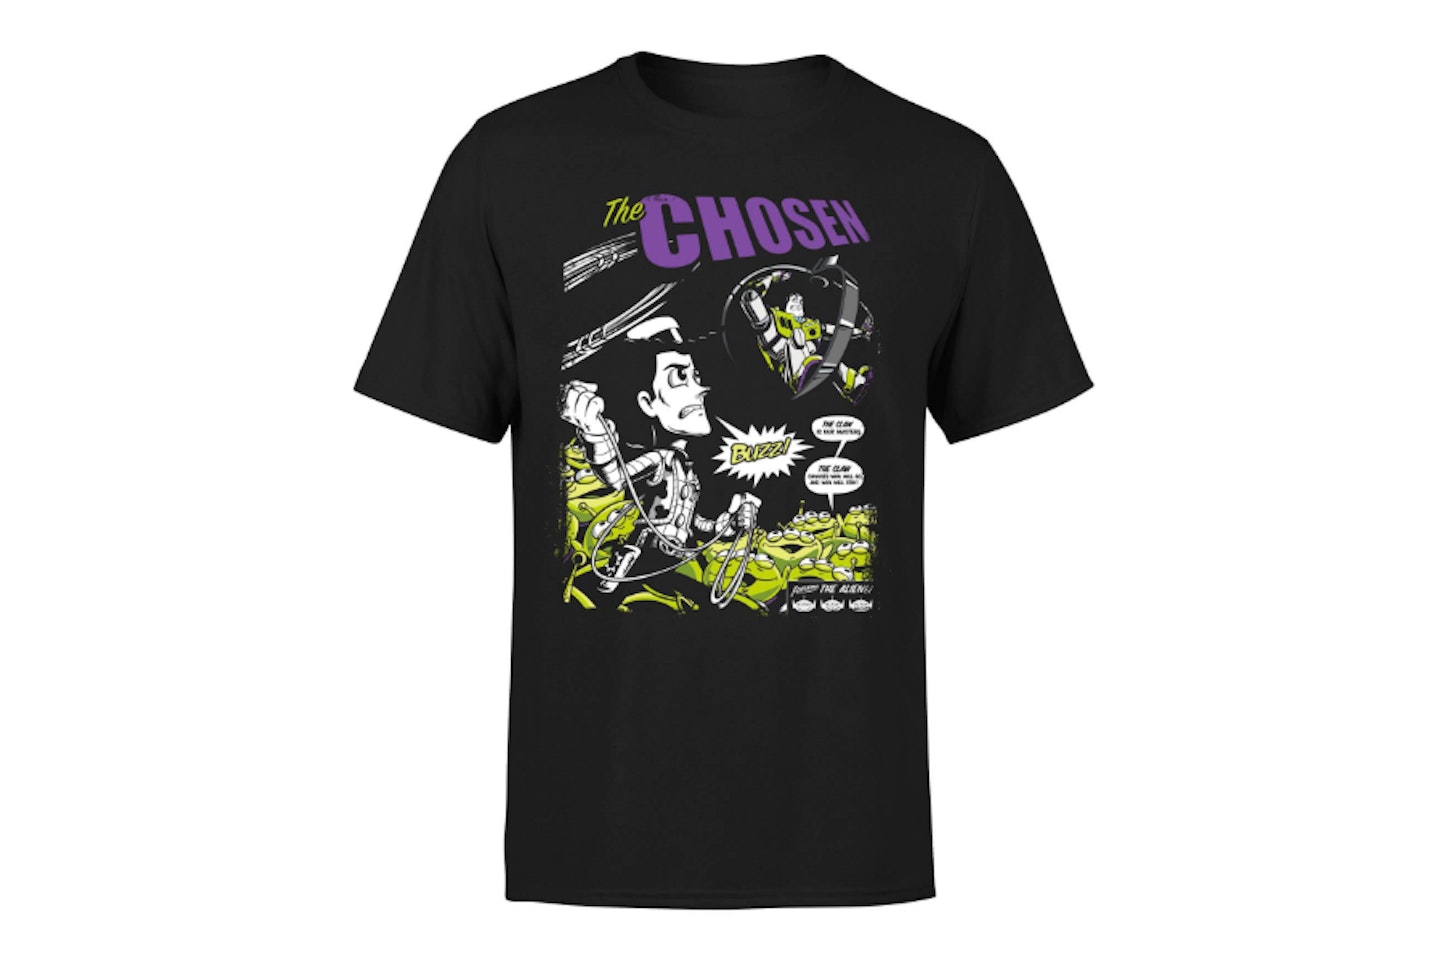 The Chosen Comic Book Style T-Shirt